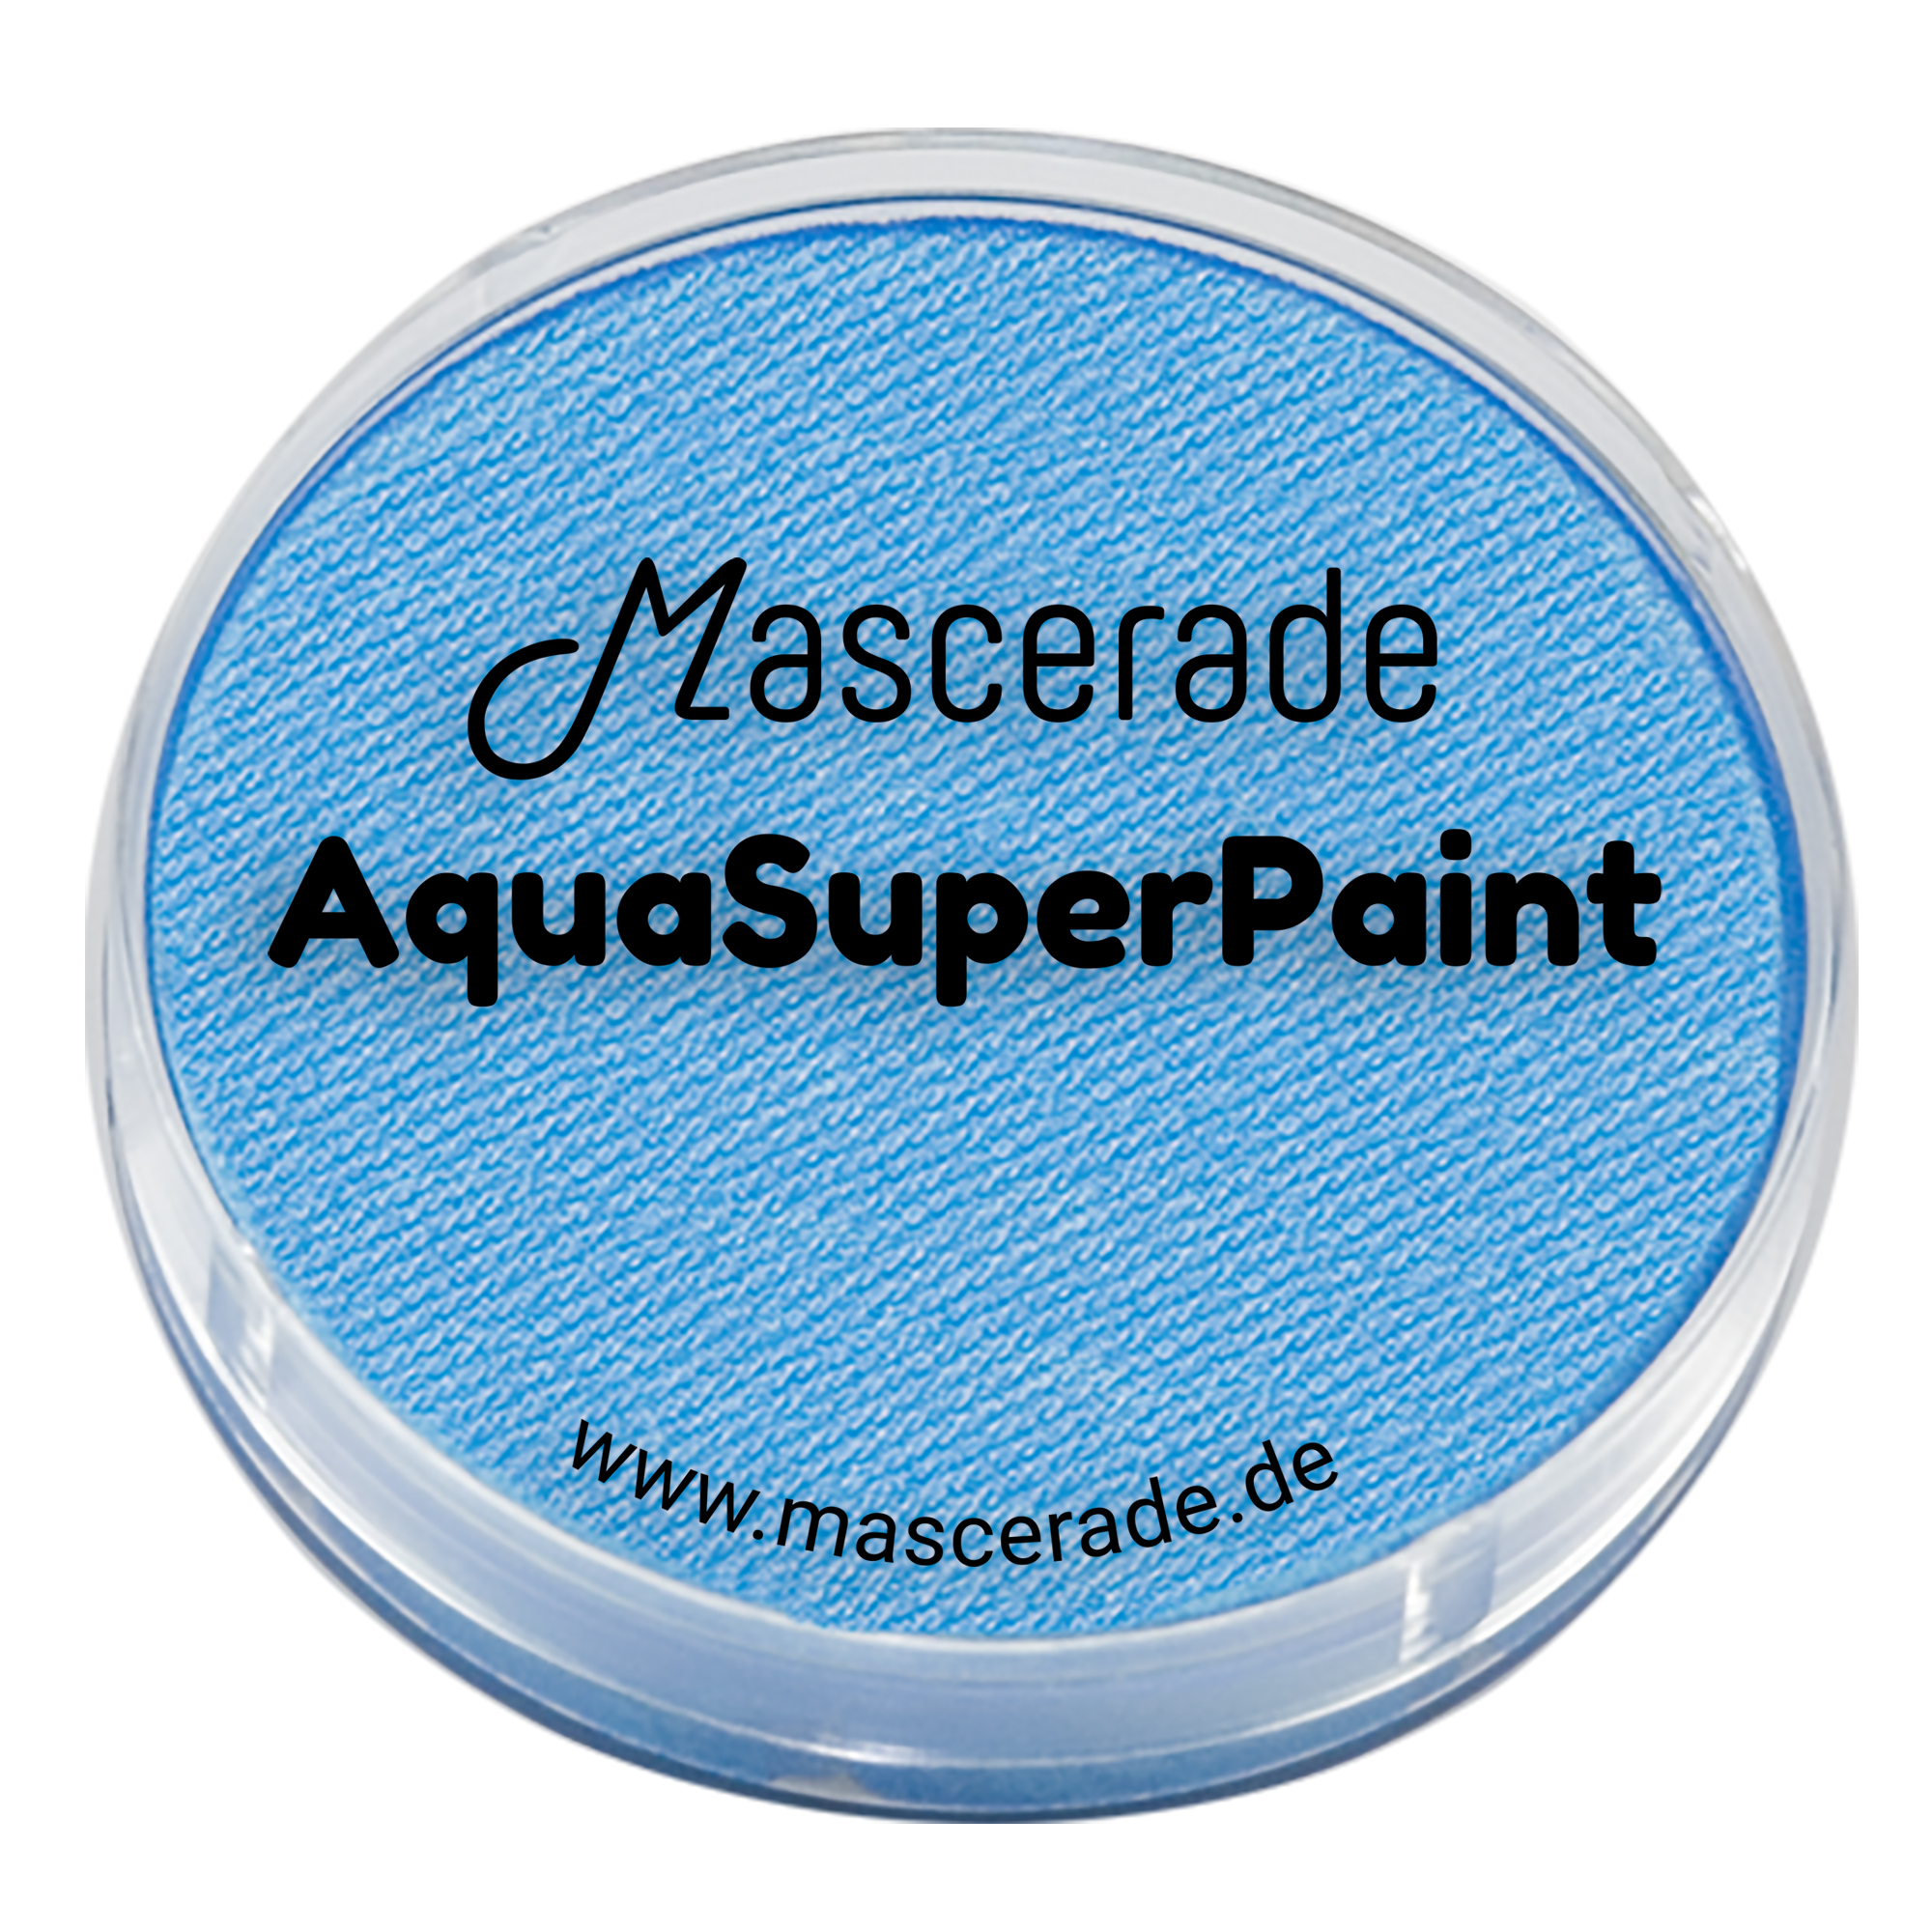 Mascerade AquaSuperPaint Blau mit Glitter 30 ml Dose